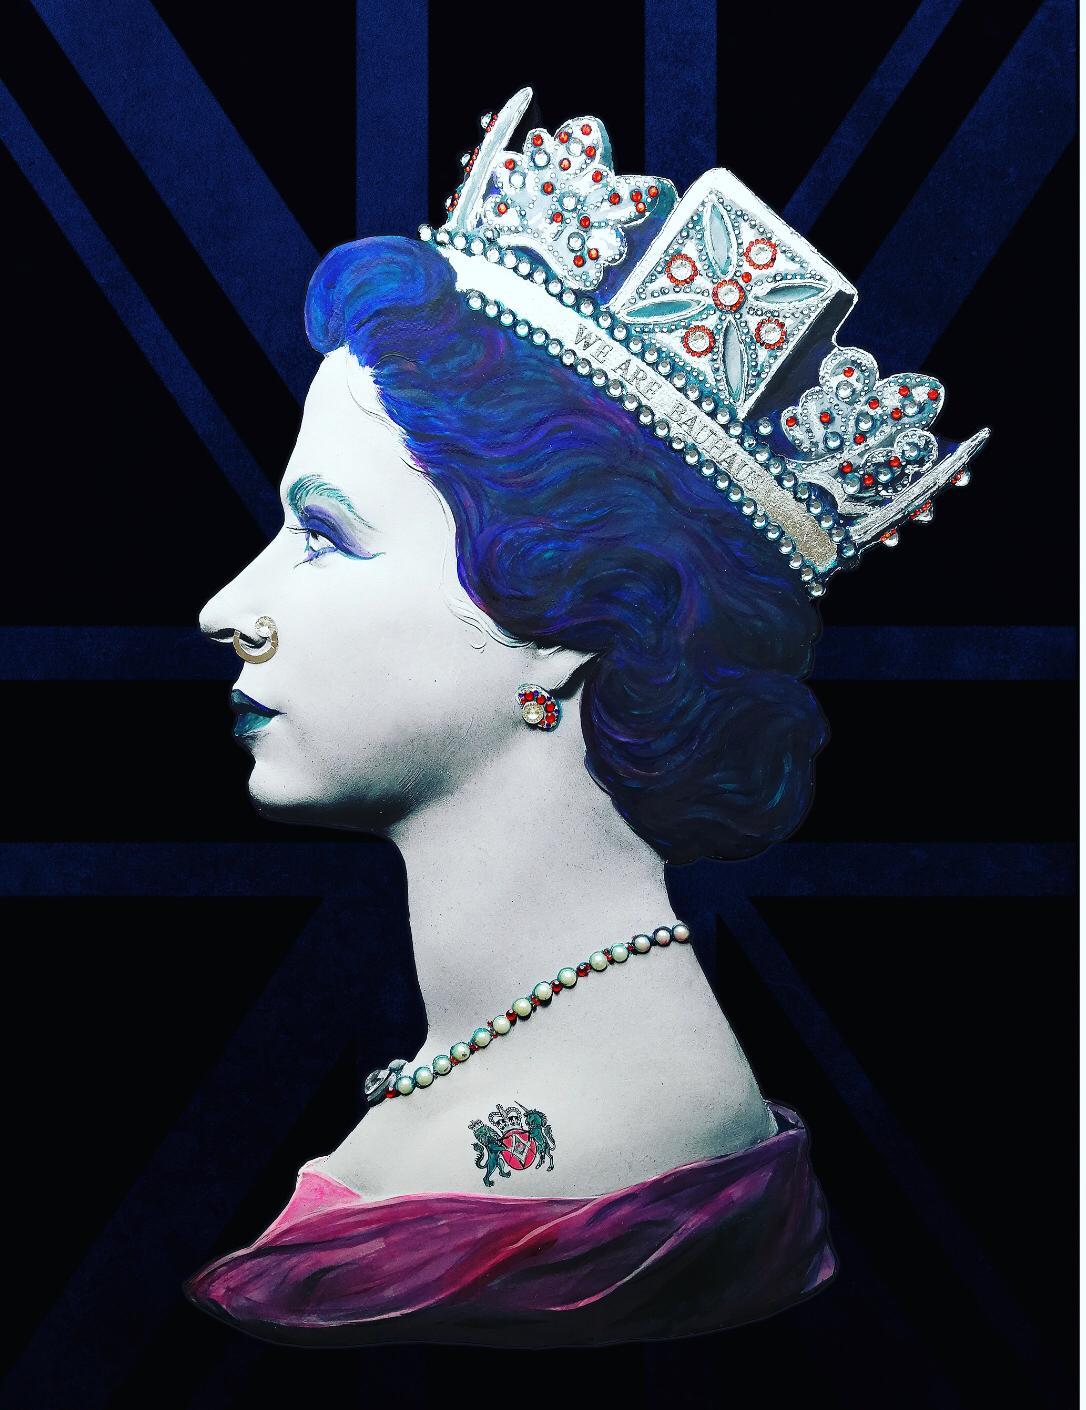 Queen goth girl  - Art by Mark Sloper